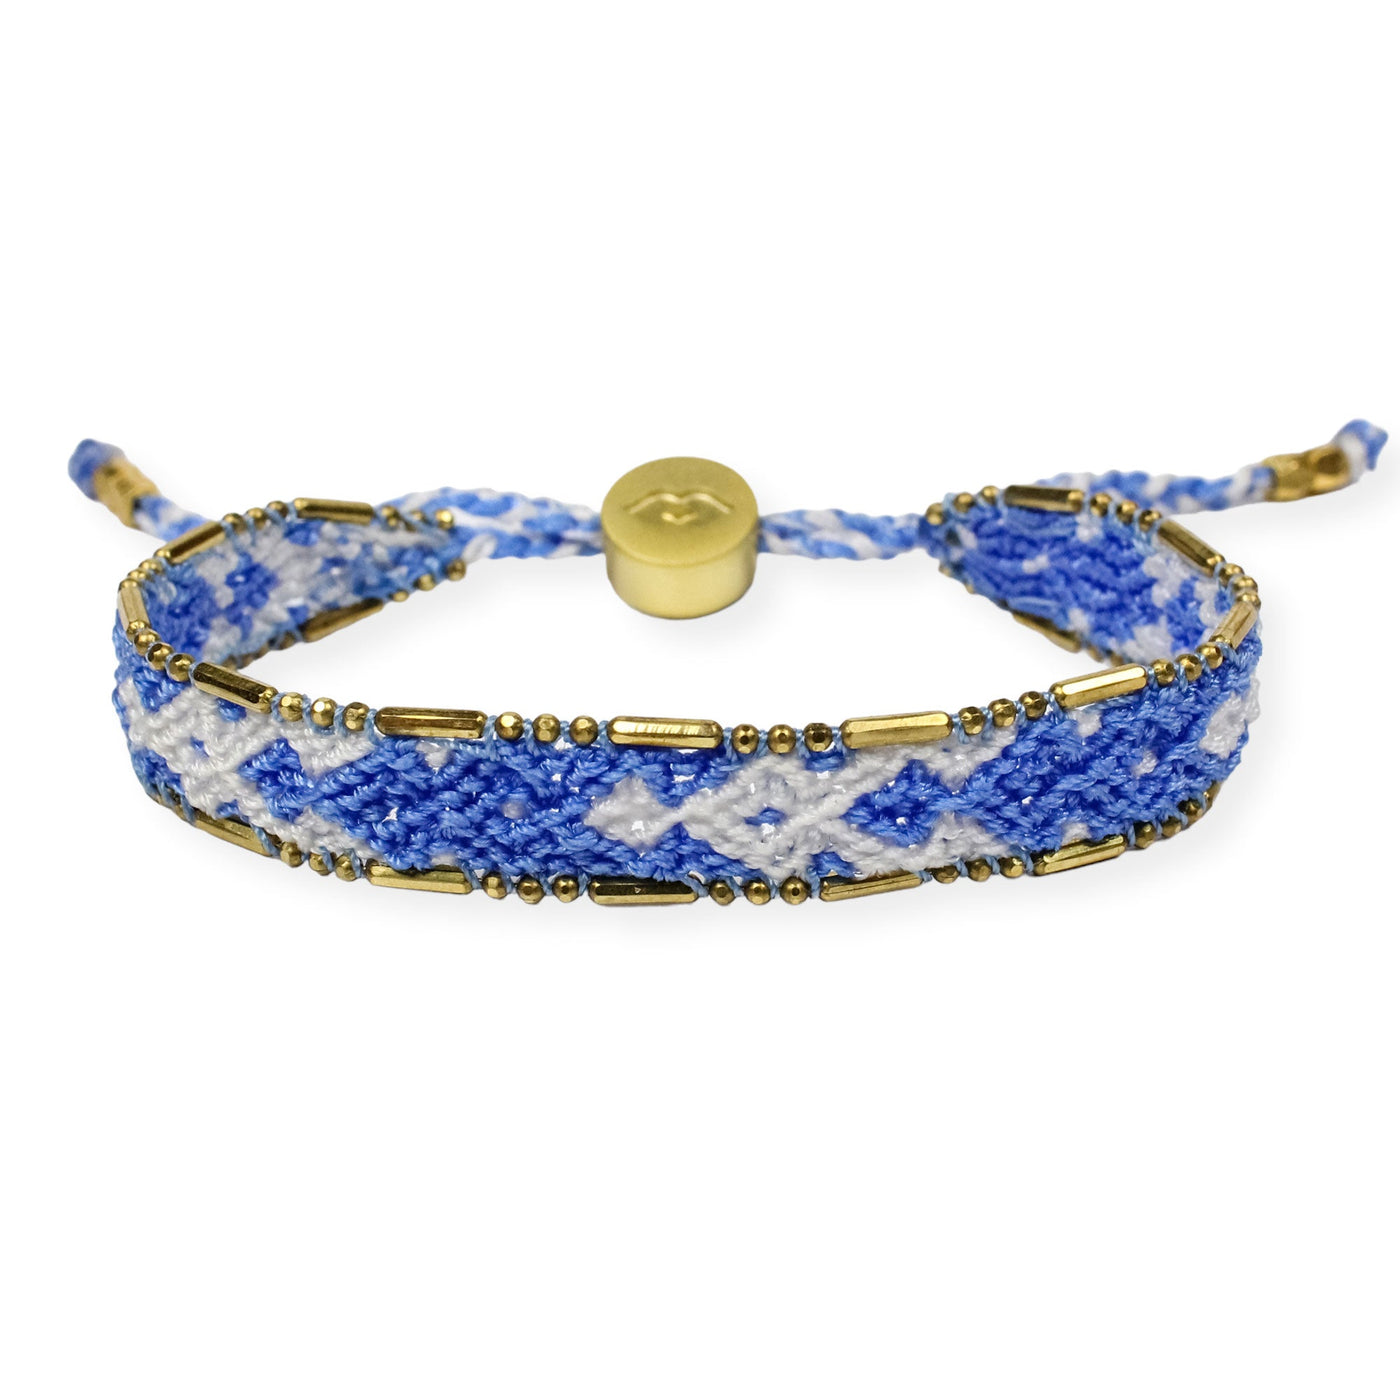 Bali Friendship Bracelet - Azure Blue and White